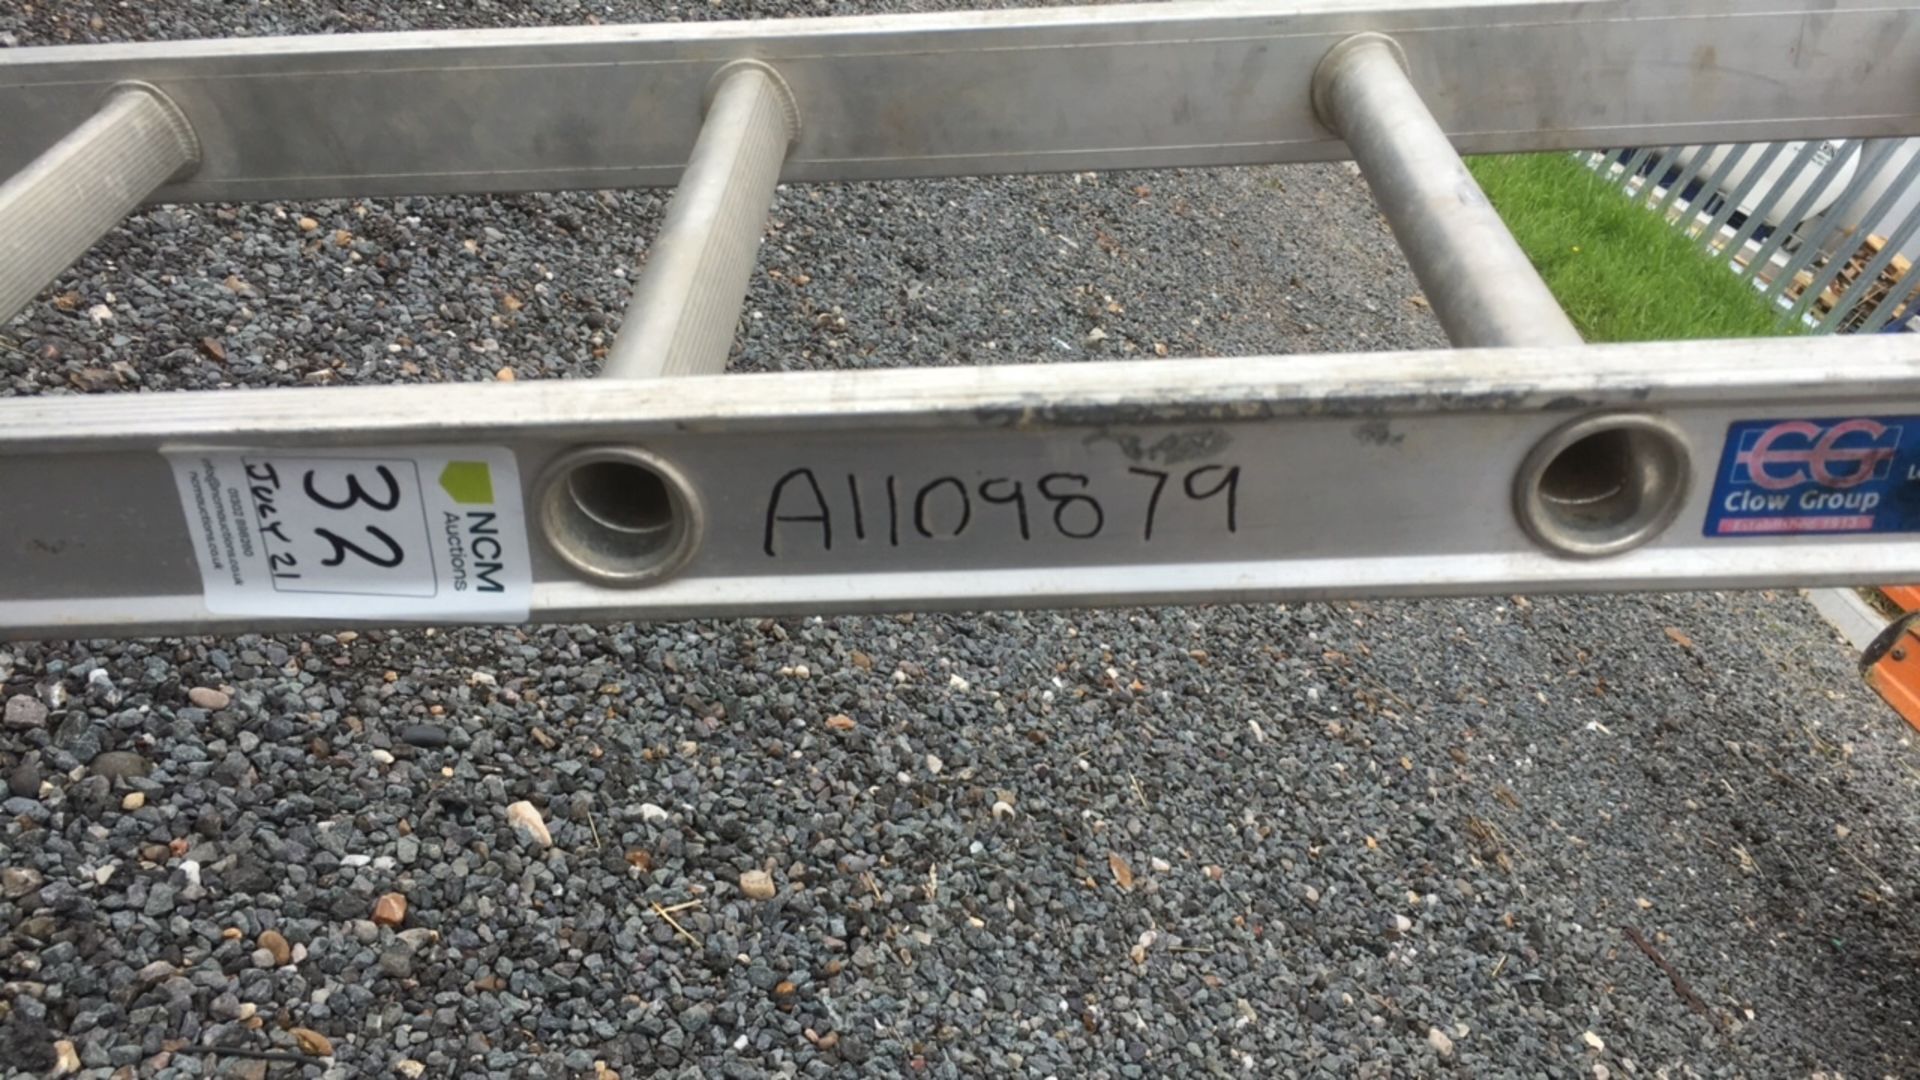 Clow single 3m aluminium ladder (a1109879) - Image 2 of 2